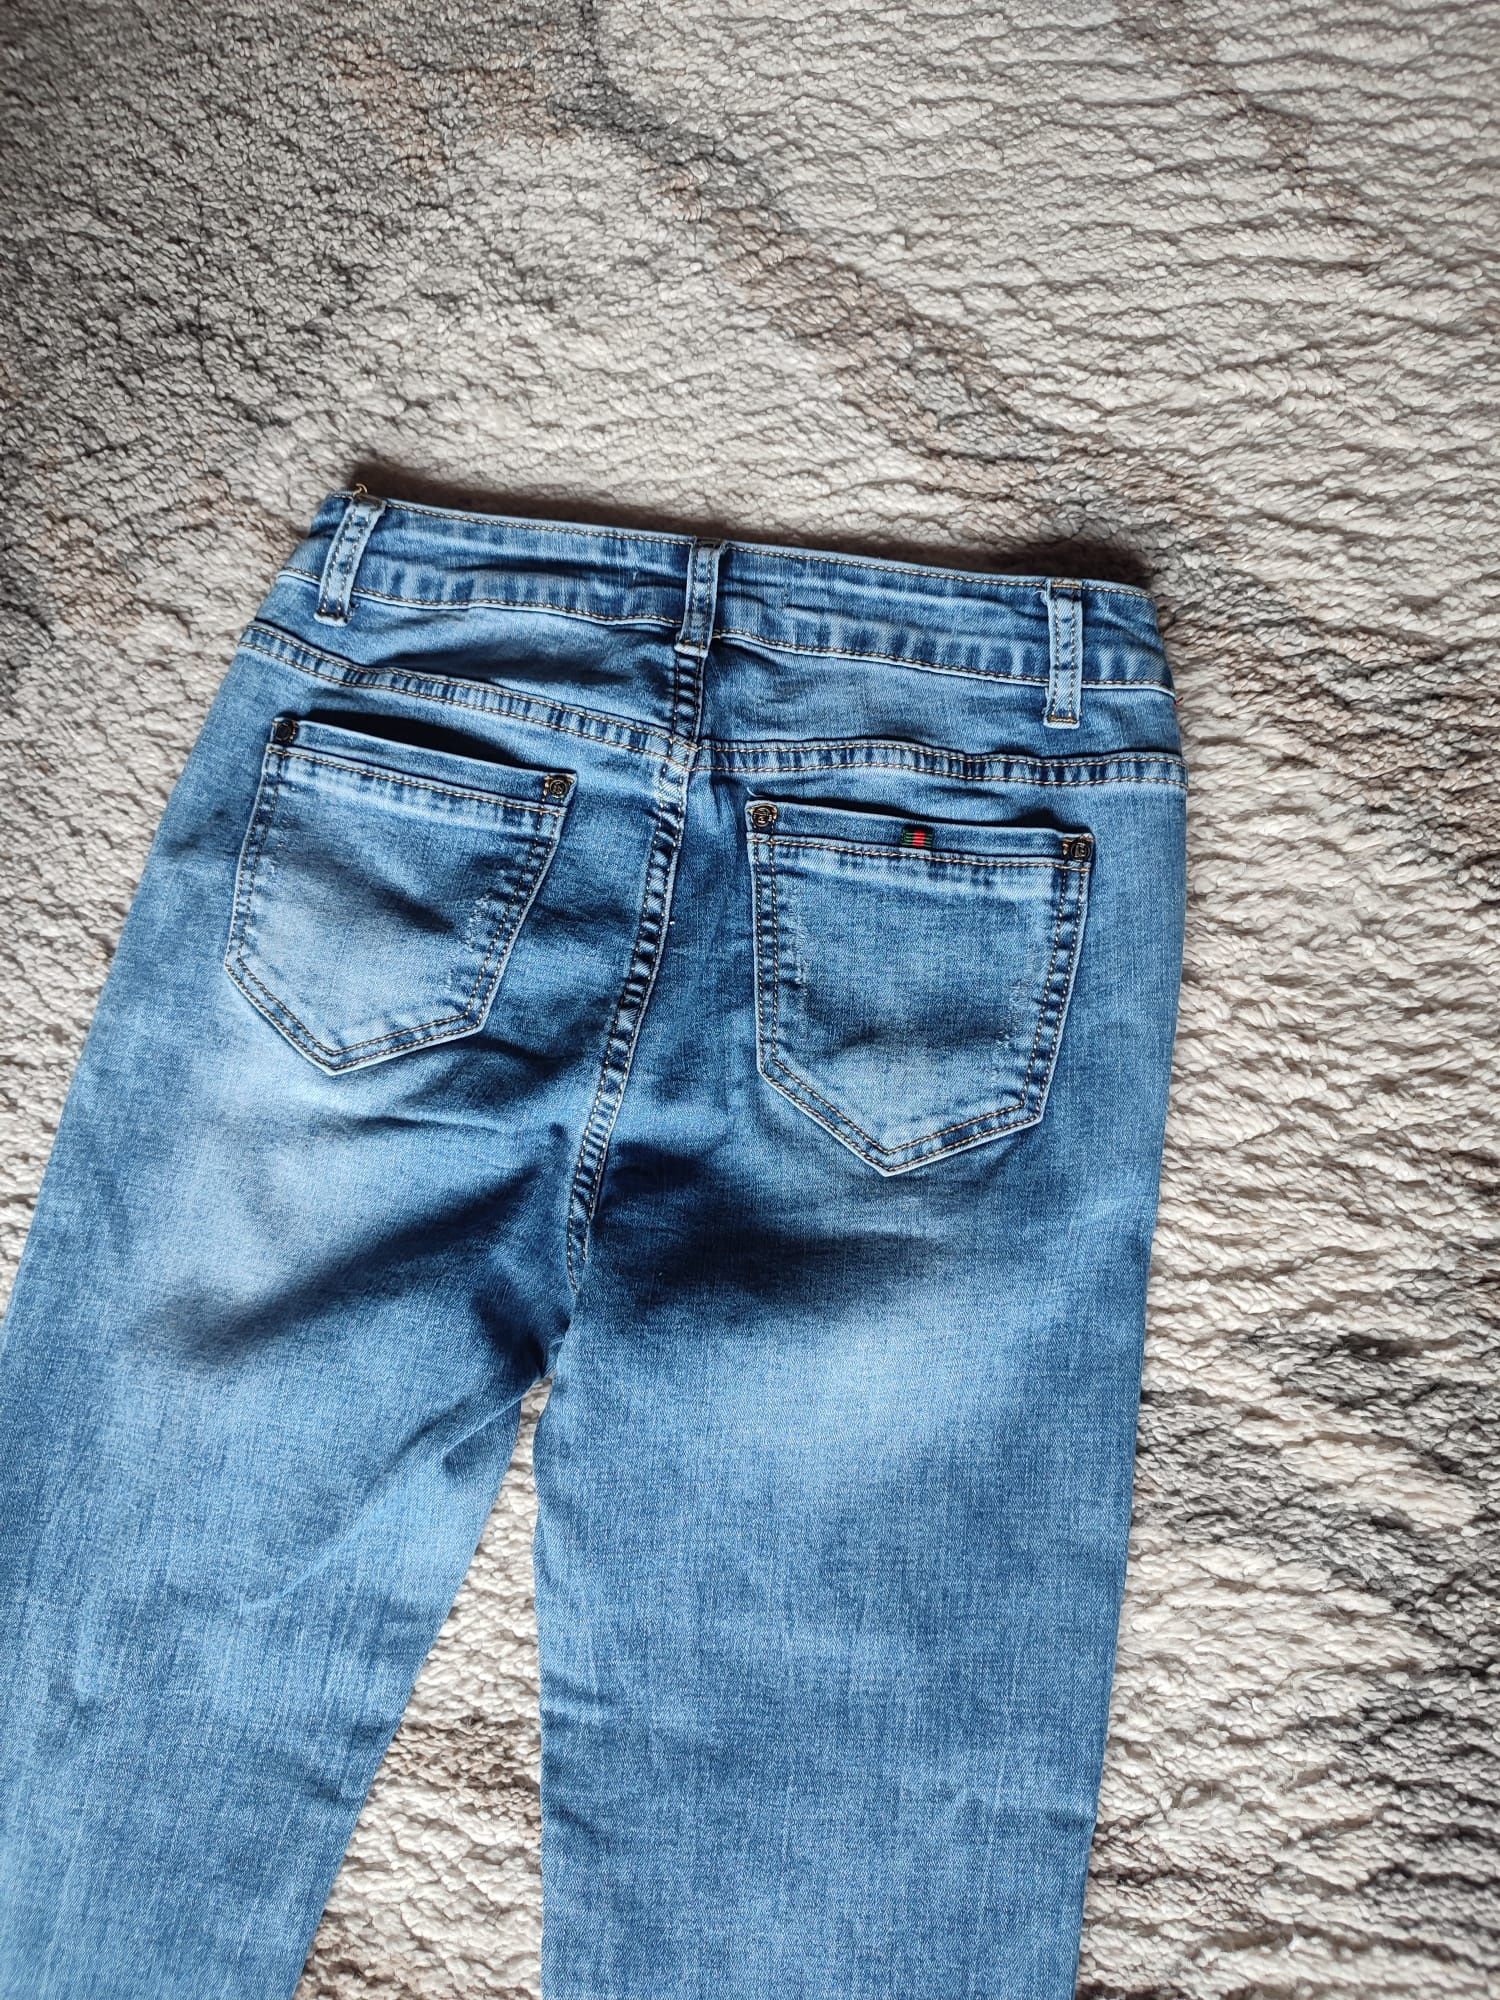 Spodnie jeansy jeans dżinsy